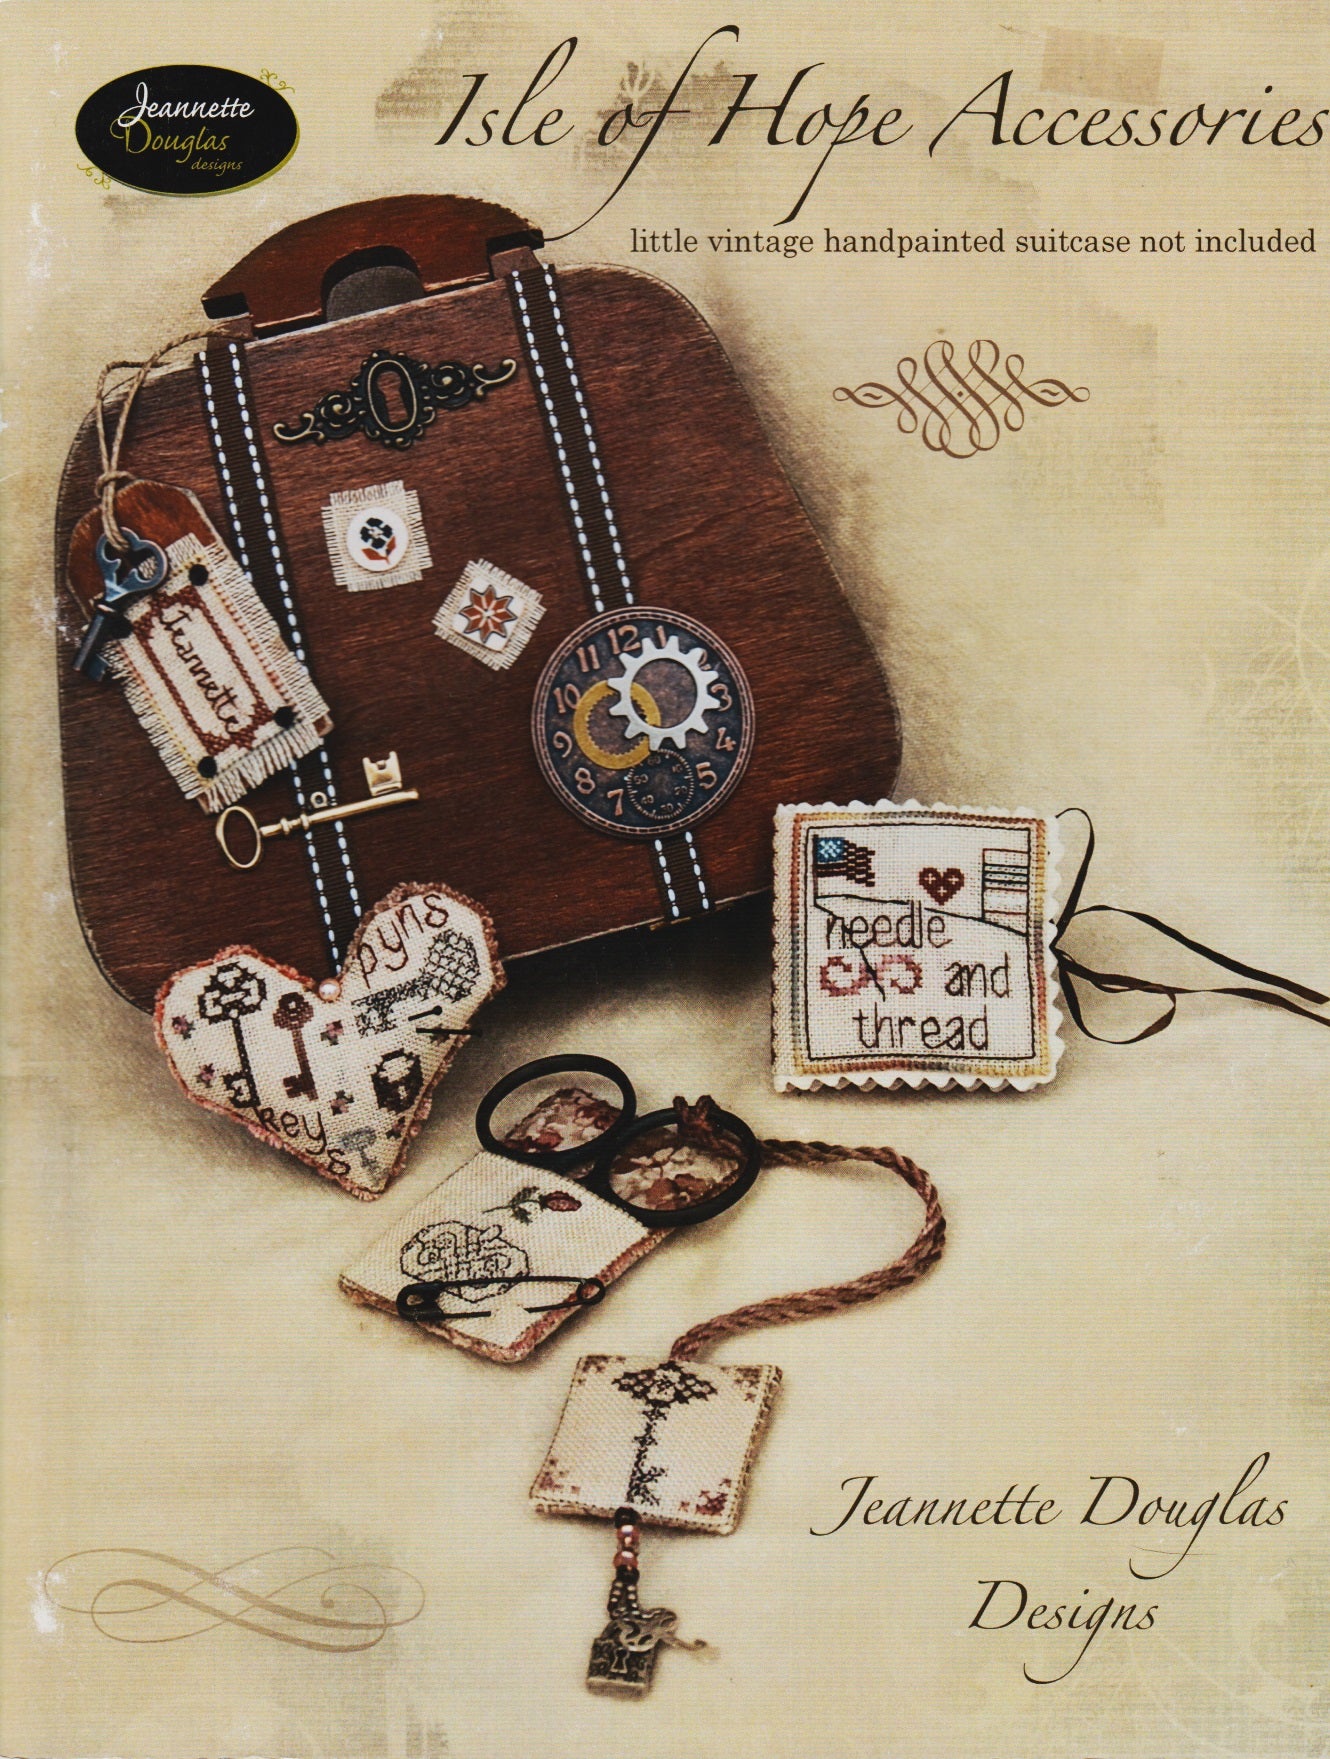 Jeannette Douglas Designs Isle of Hope Accessories cross stitch pattern